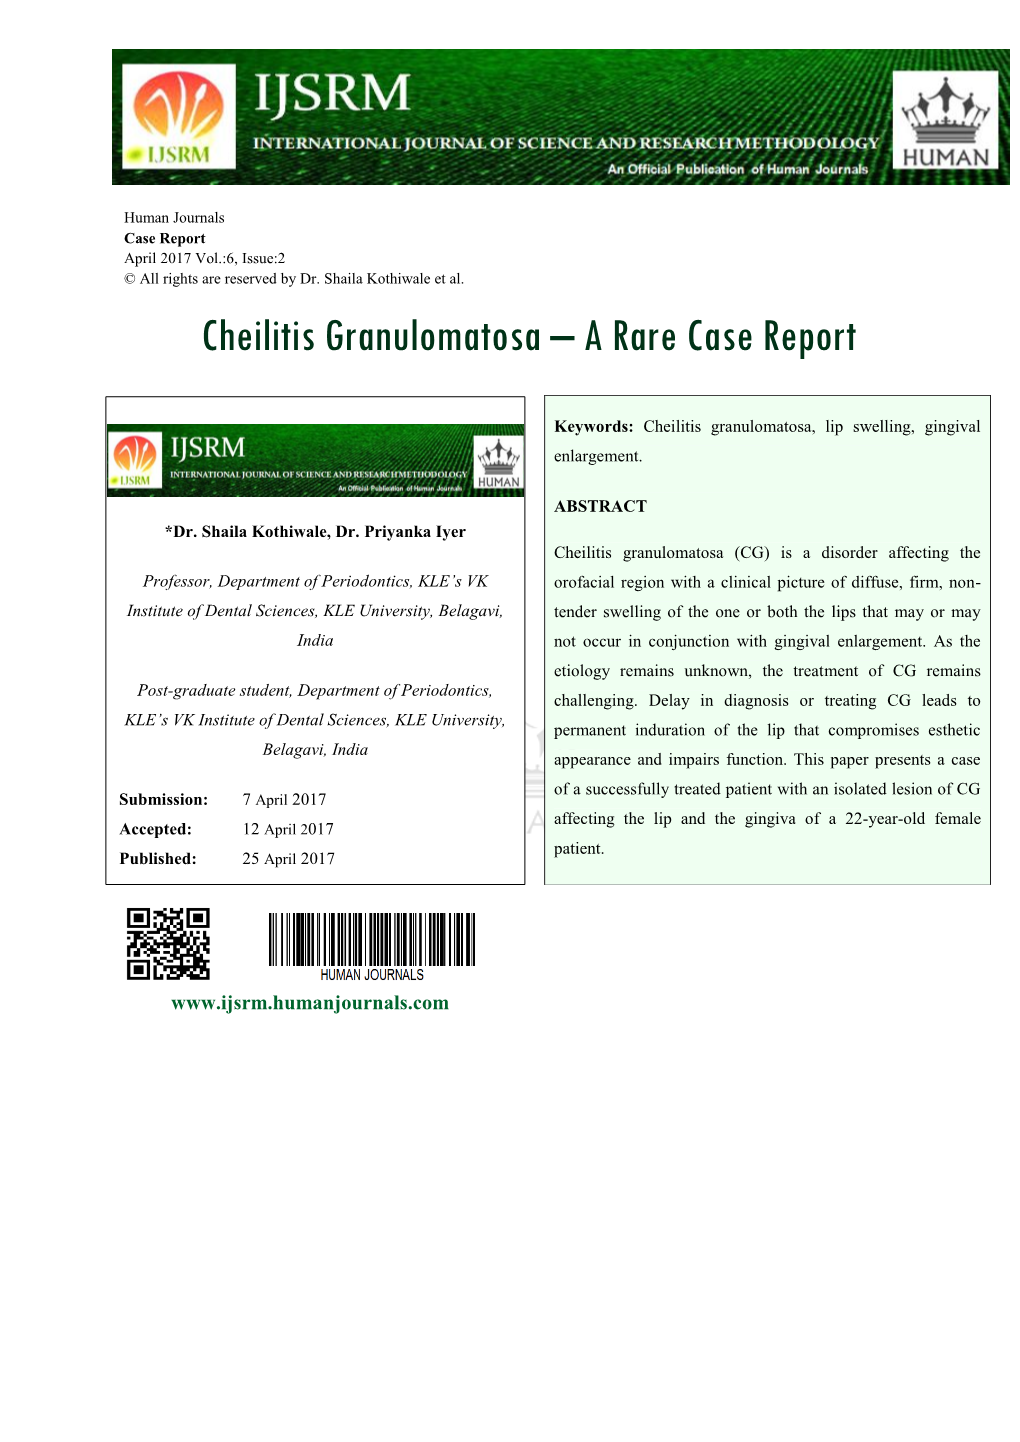 Cheilitis Granulomatosa – a Rare Case Report